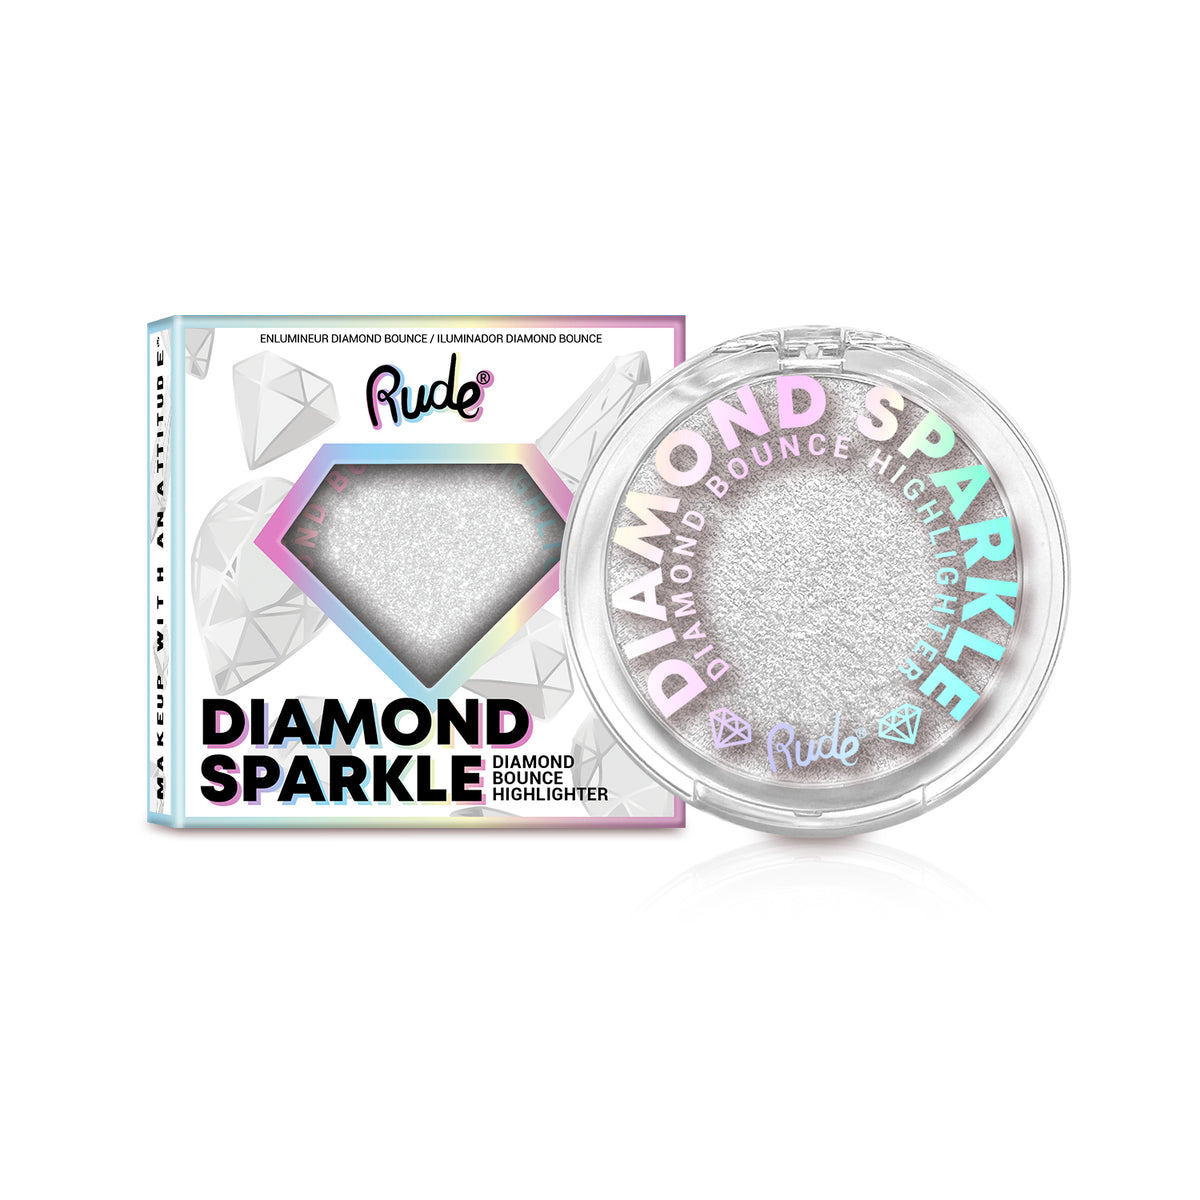 Diamond Sparkle Diamond Bounce Highlighter